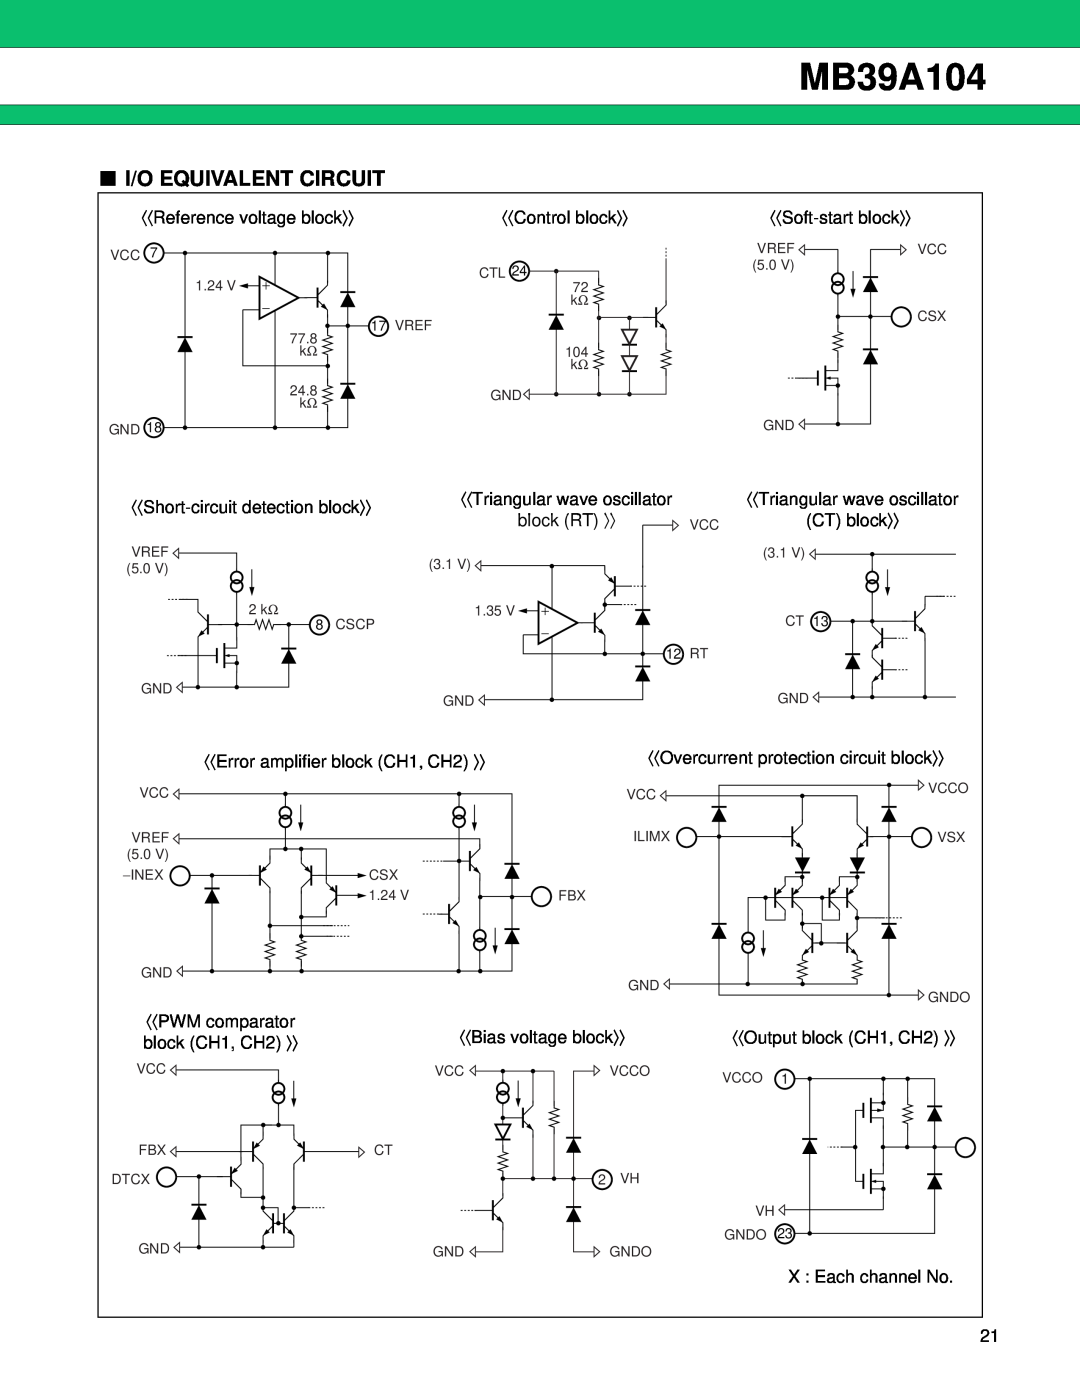 Fujitsu MB39A104 manual I/O Equivalent Circuit 